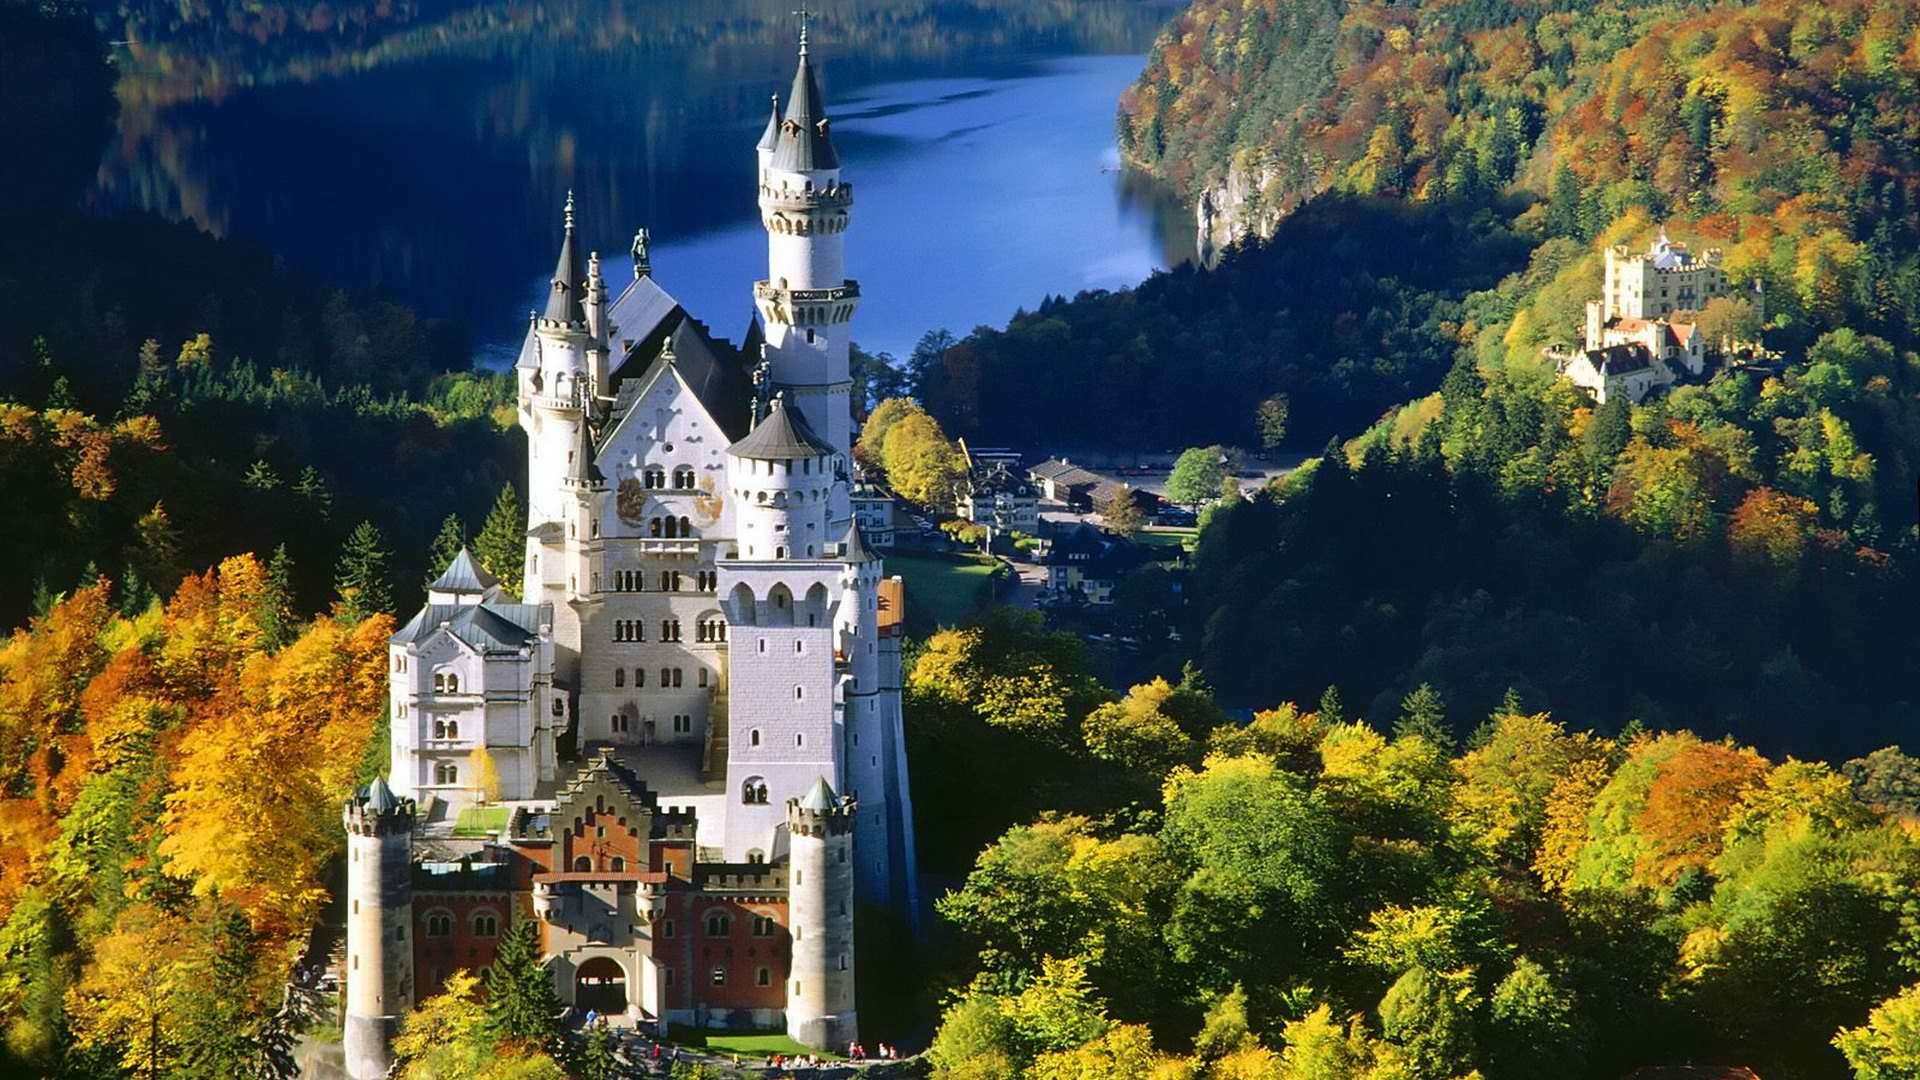 man made, neuschwanstein castle, castle, castles